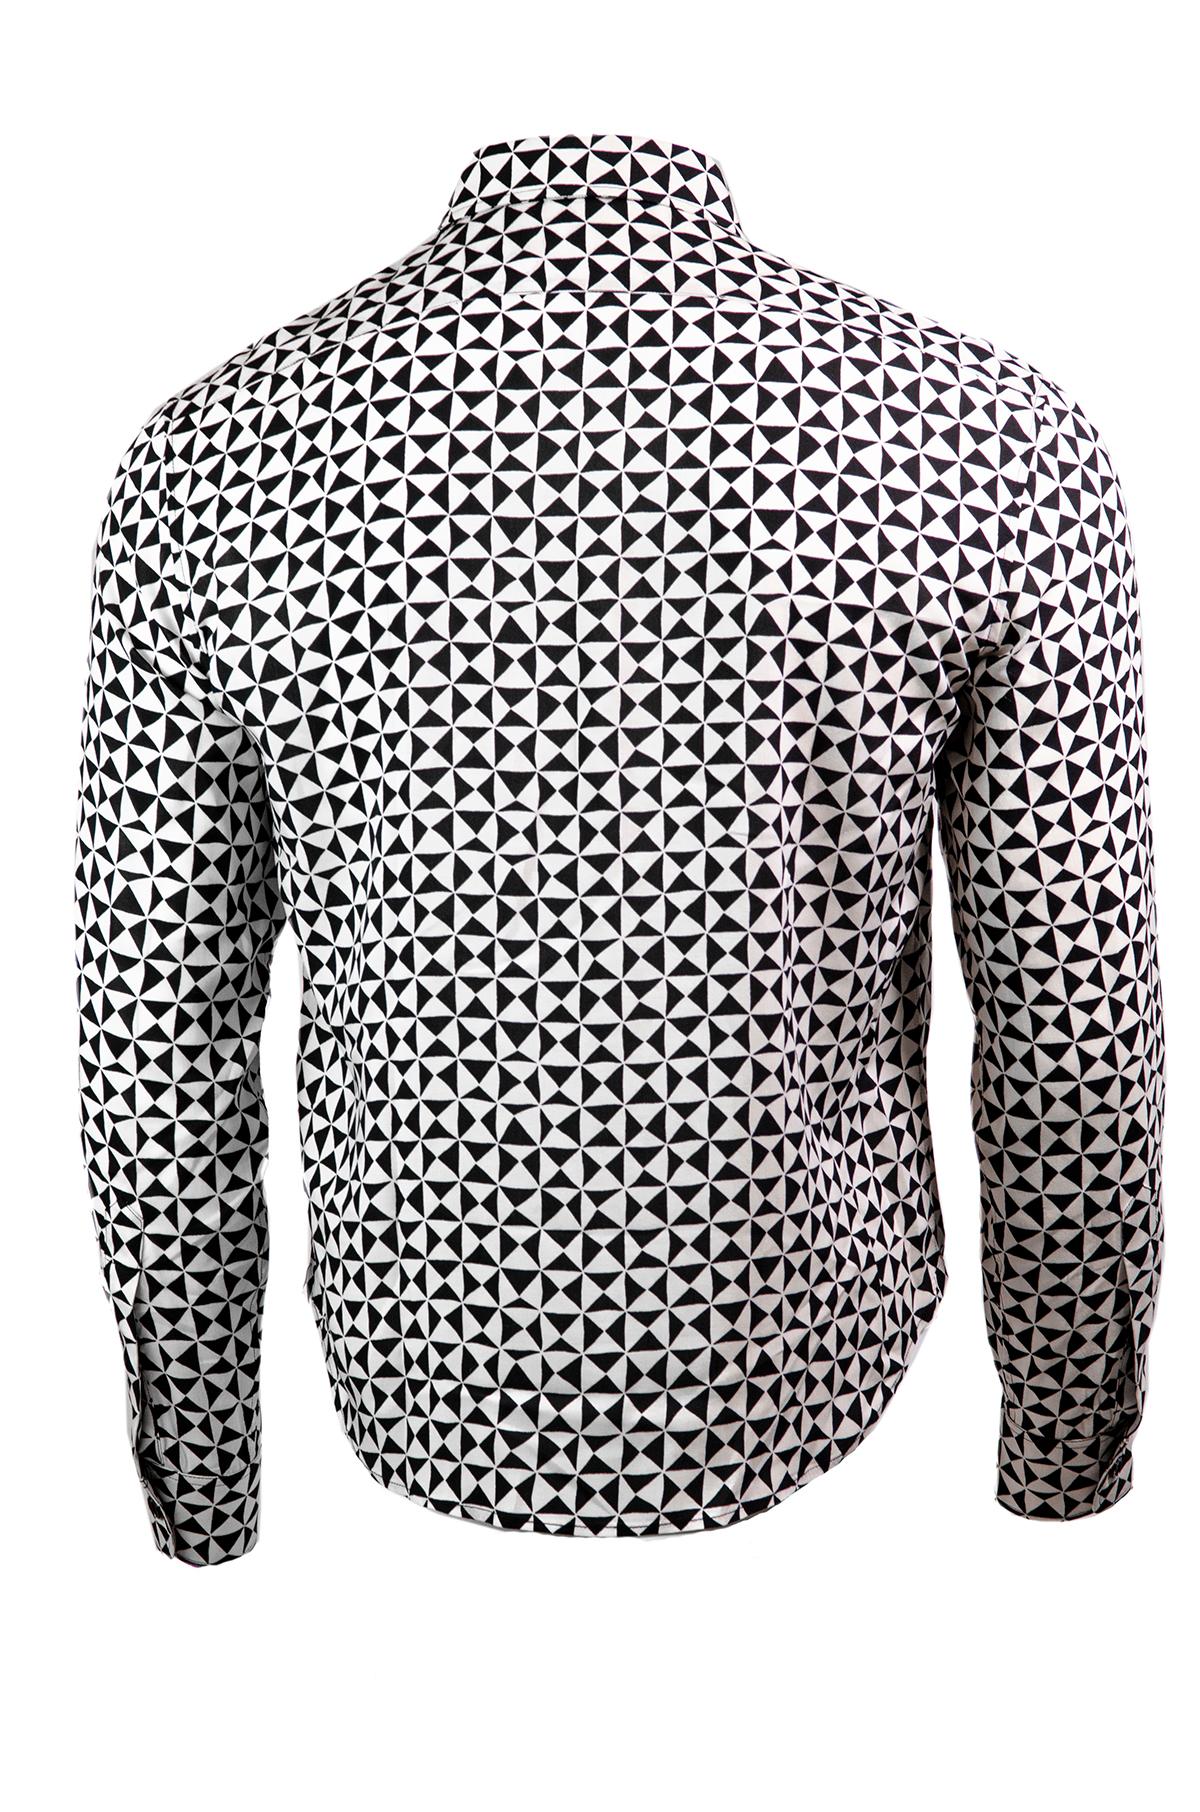 Gray CELINE BY HEDI SLIMANE 70's Inspired Monochrome Shirt For Sale